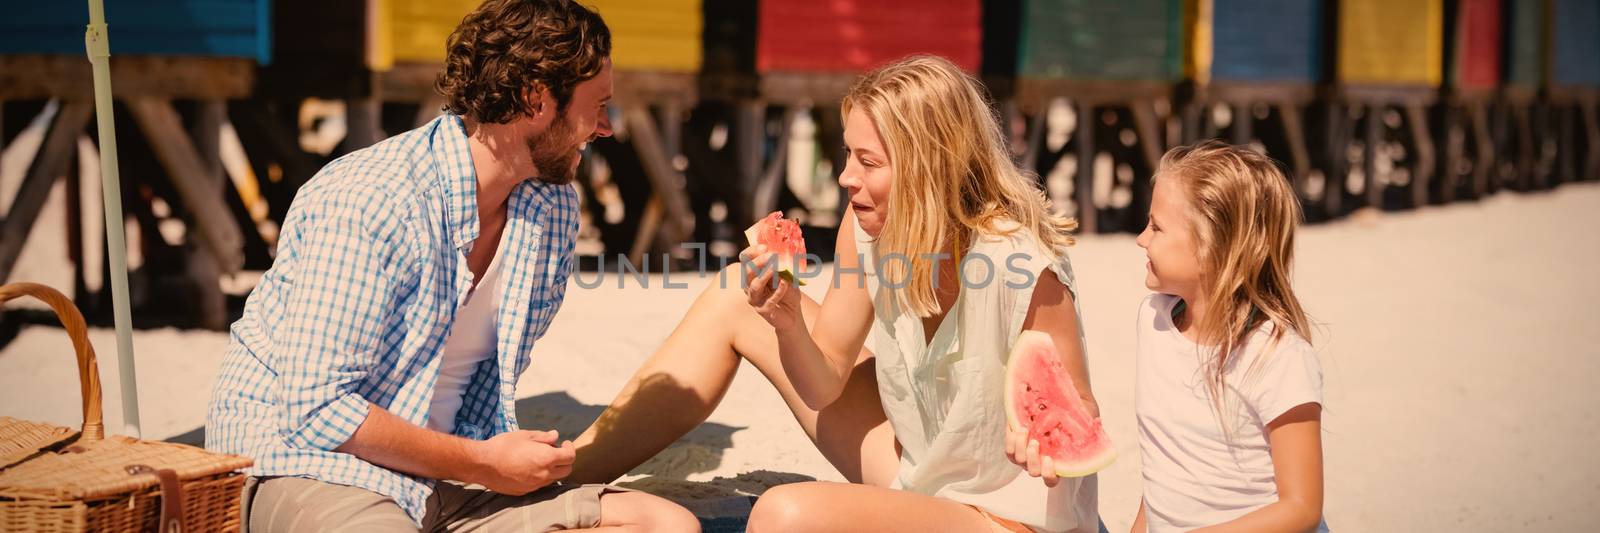 Happy family eating watermelon on blanket at beach by Wavebreakmedia